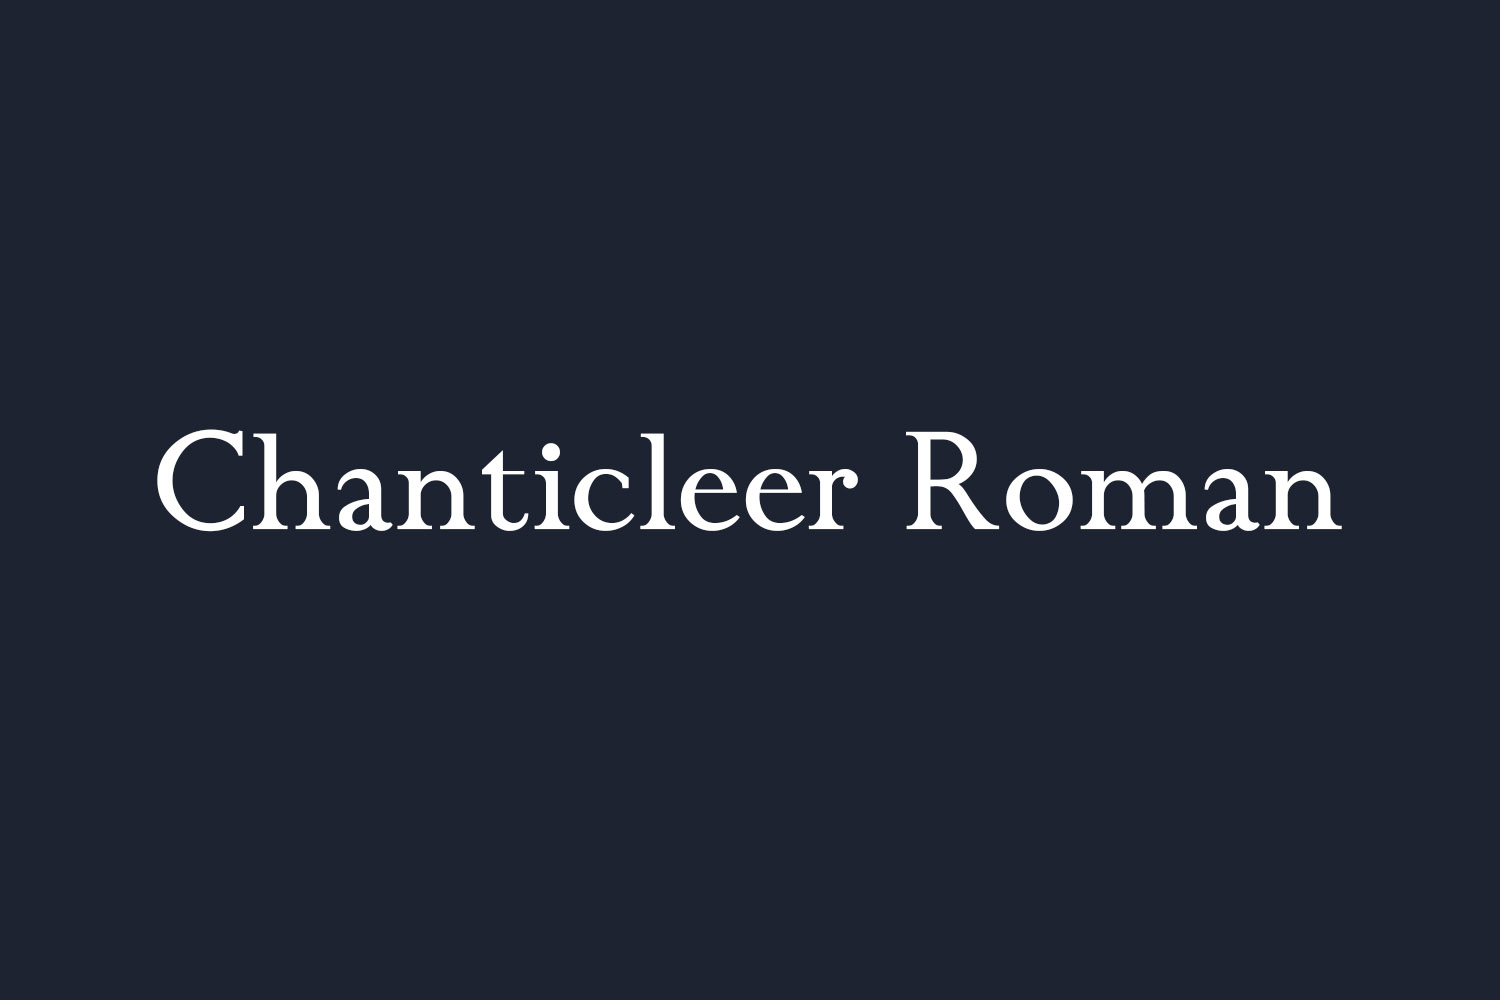 Chanticleer Roman Free Font